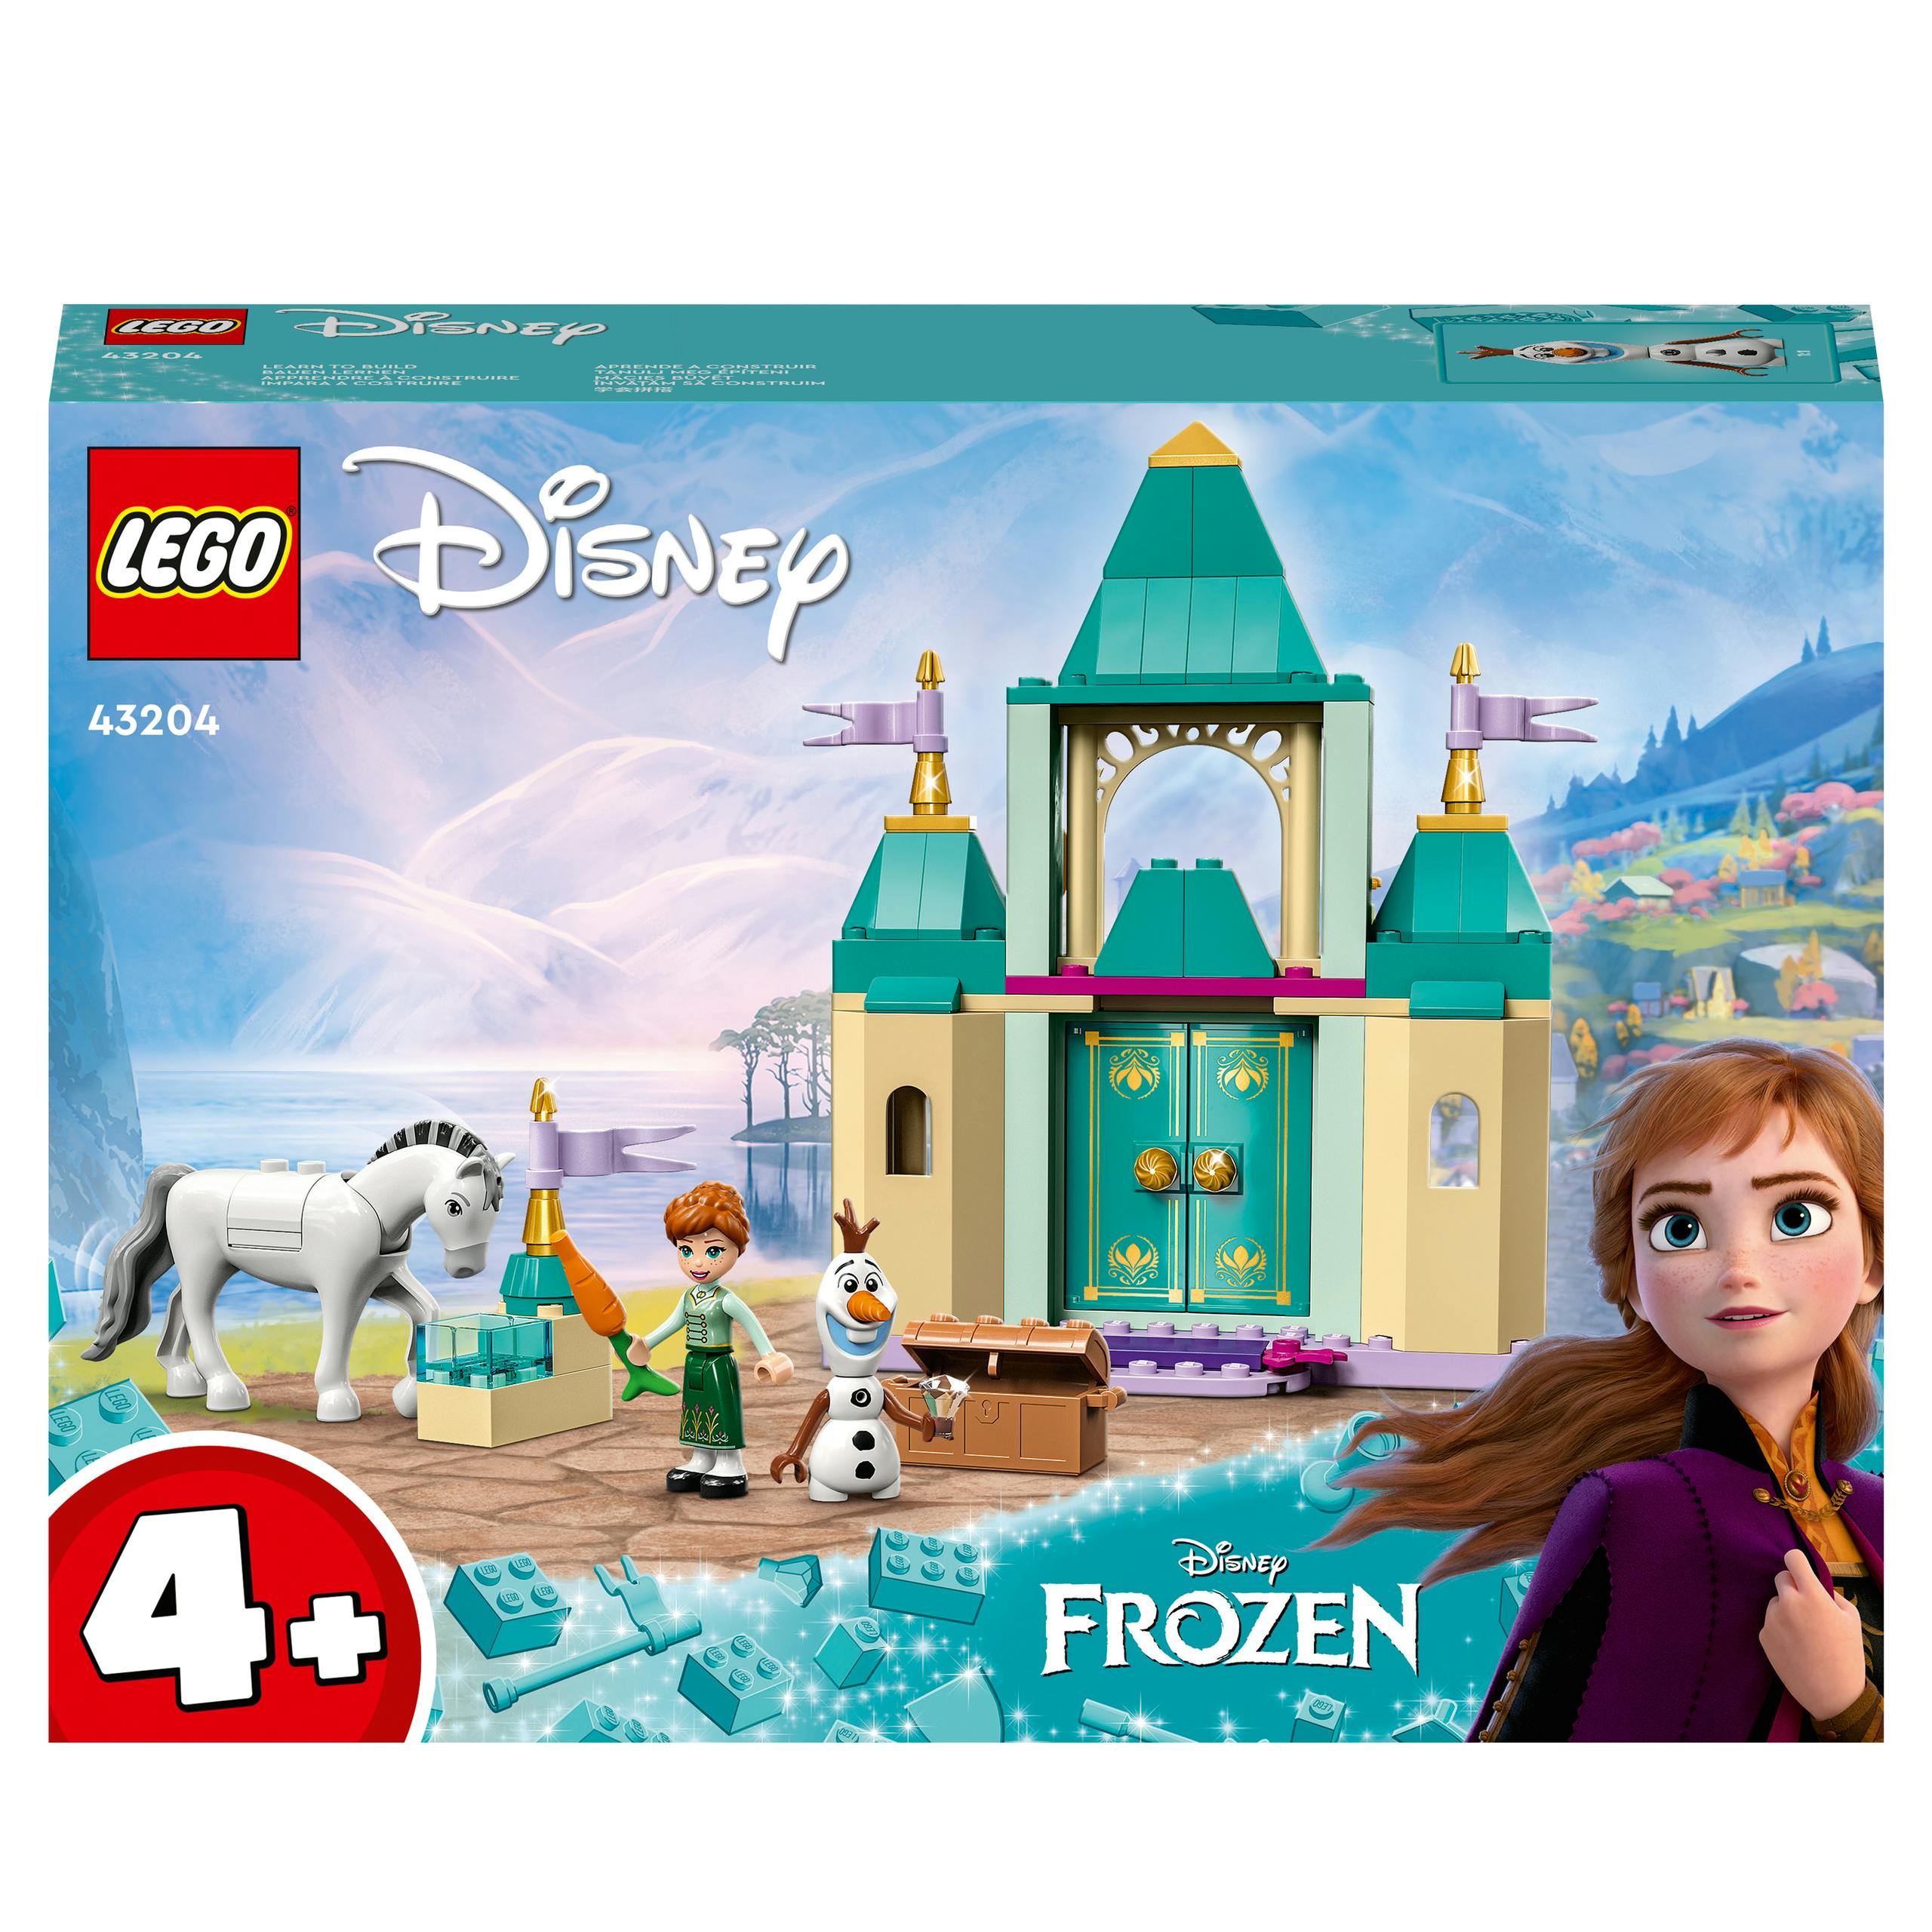 LEGO Disney Frozen Anna En Olaf Plezier In Het Kasteel - 43204